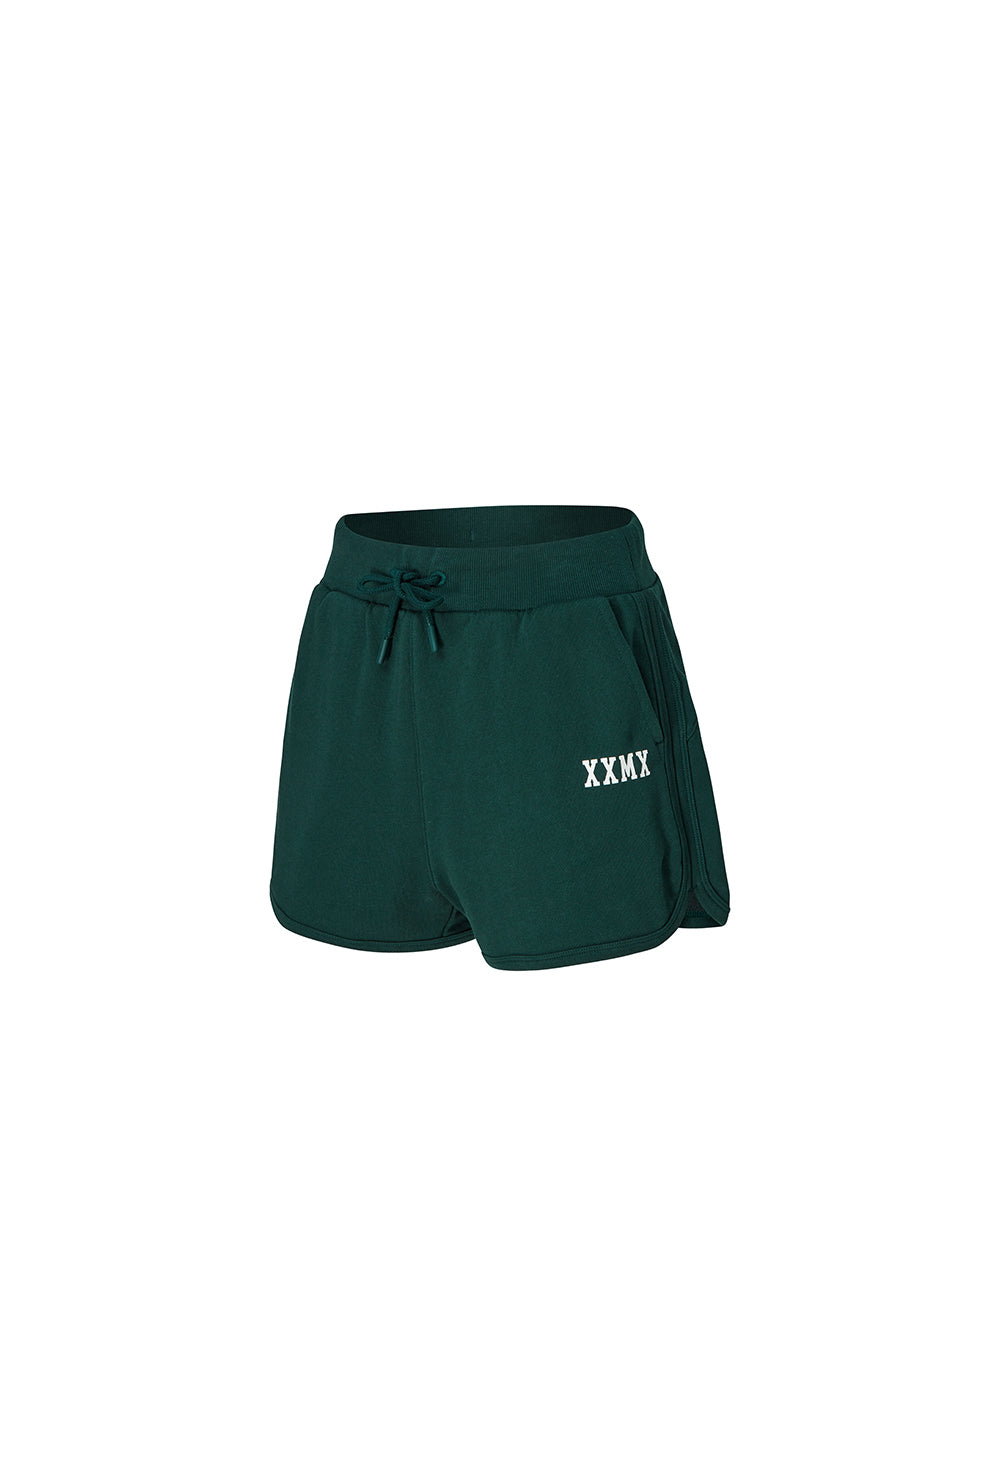 XXMX Daily Cotton Shorts - Jasper Green